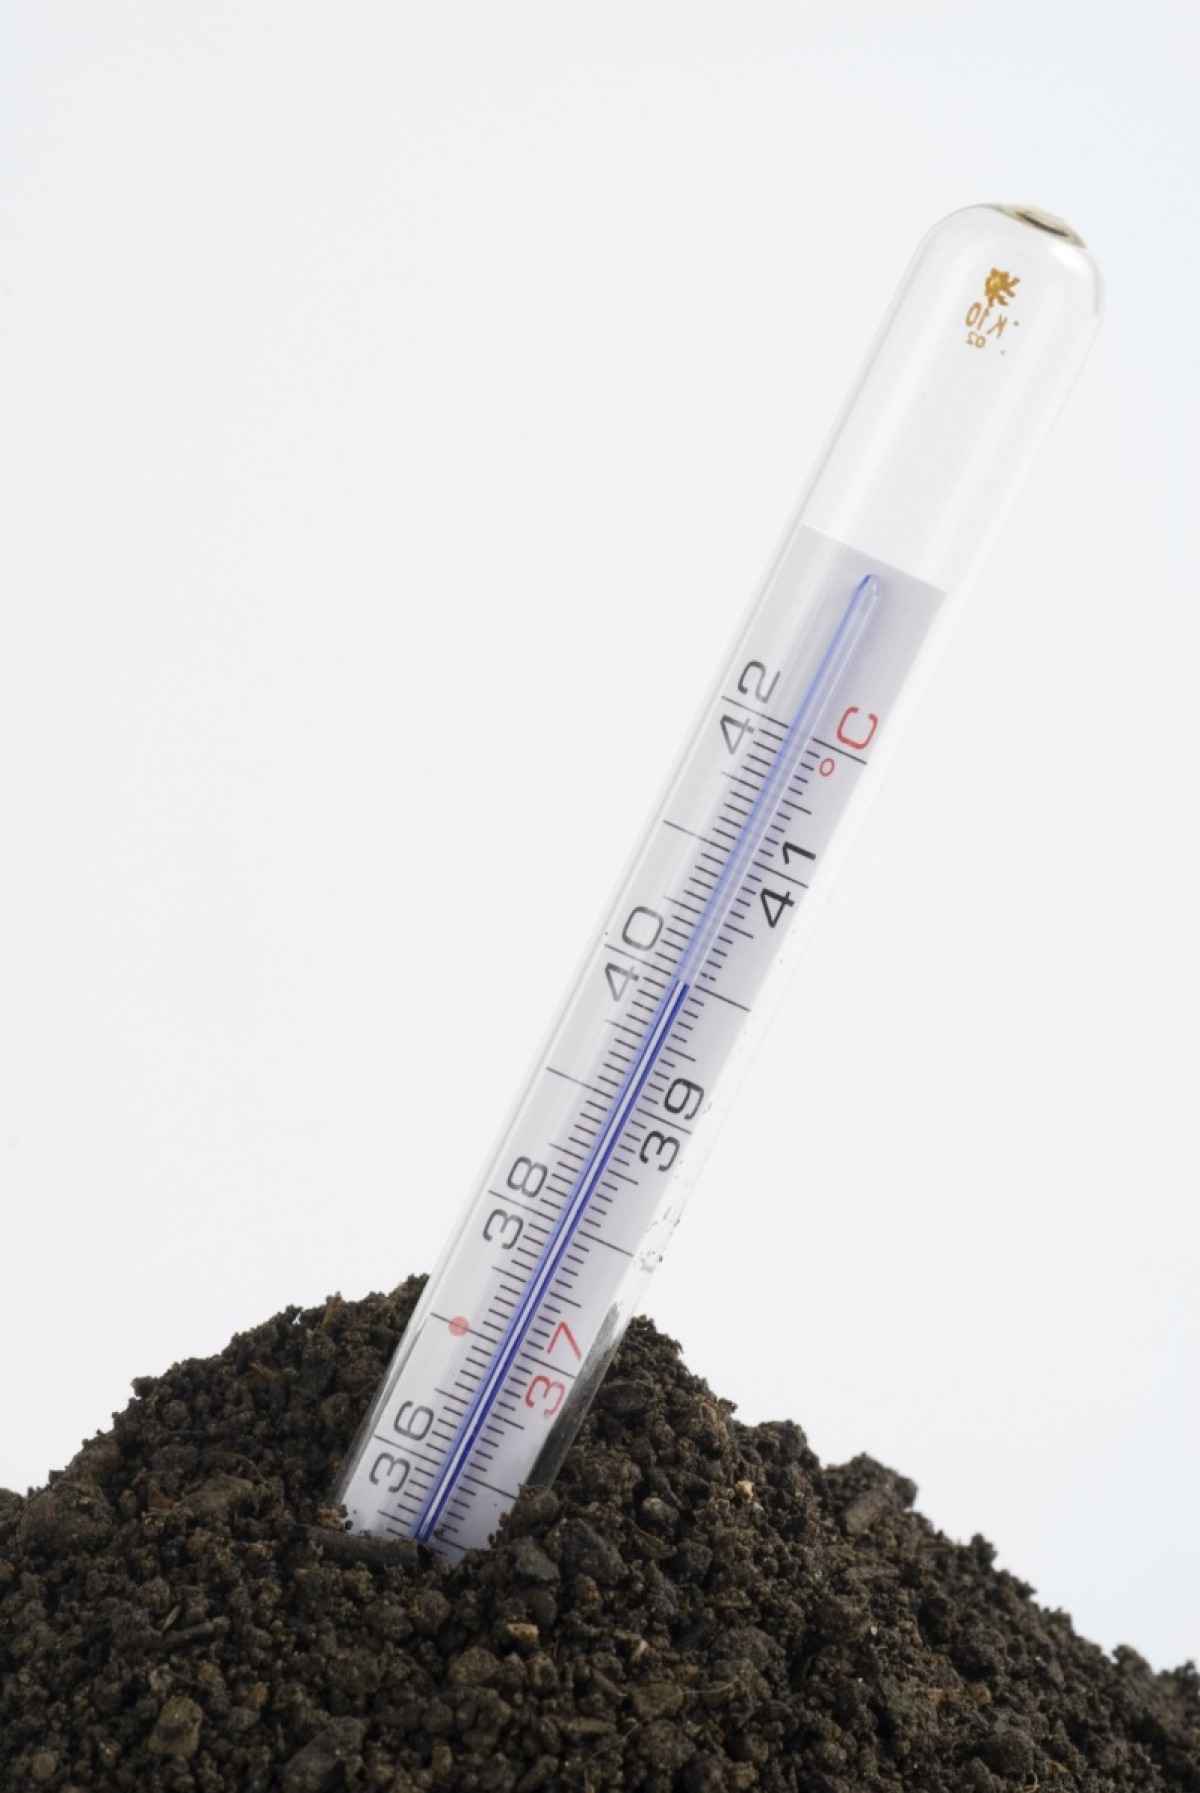 Soil Temperature Germination Chart